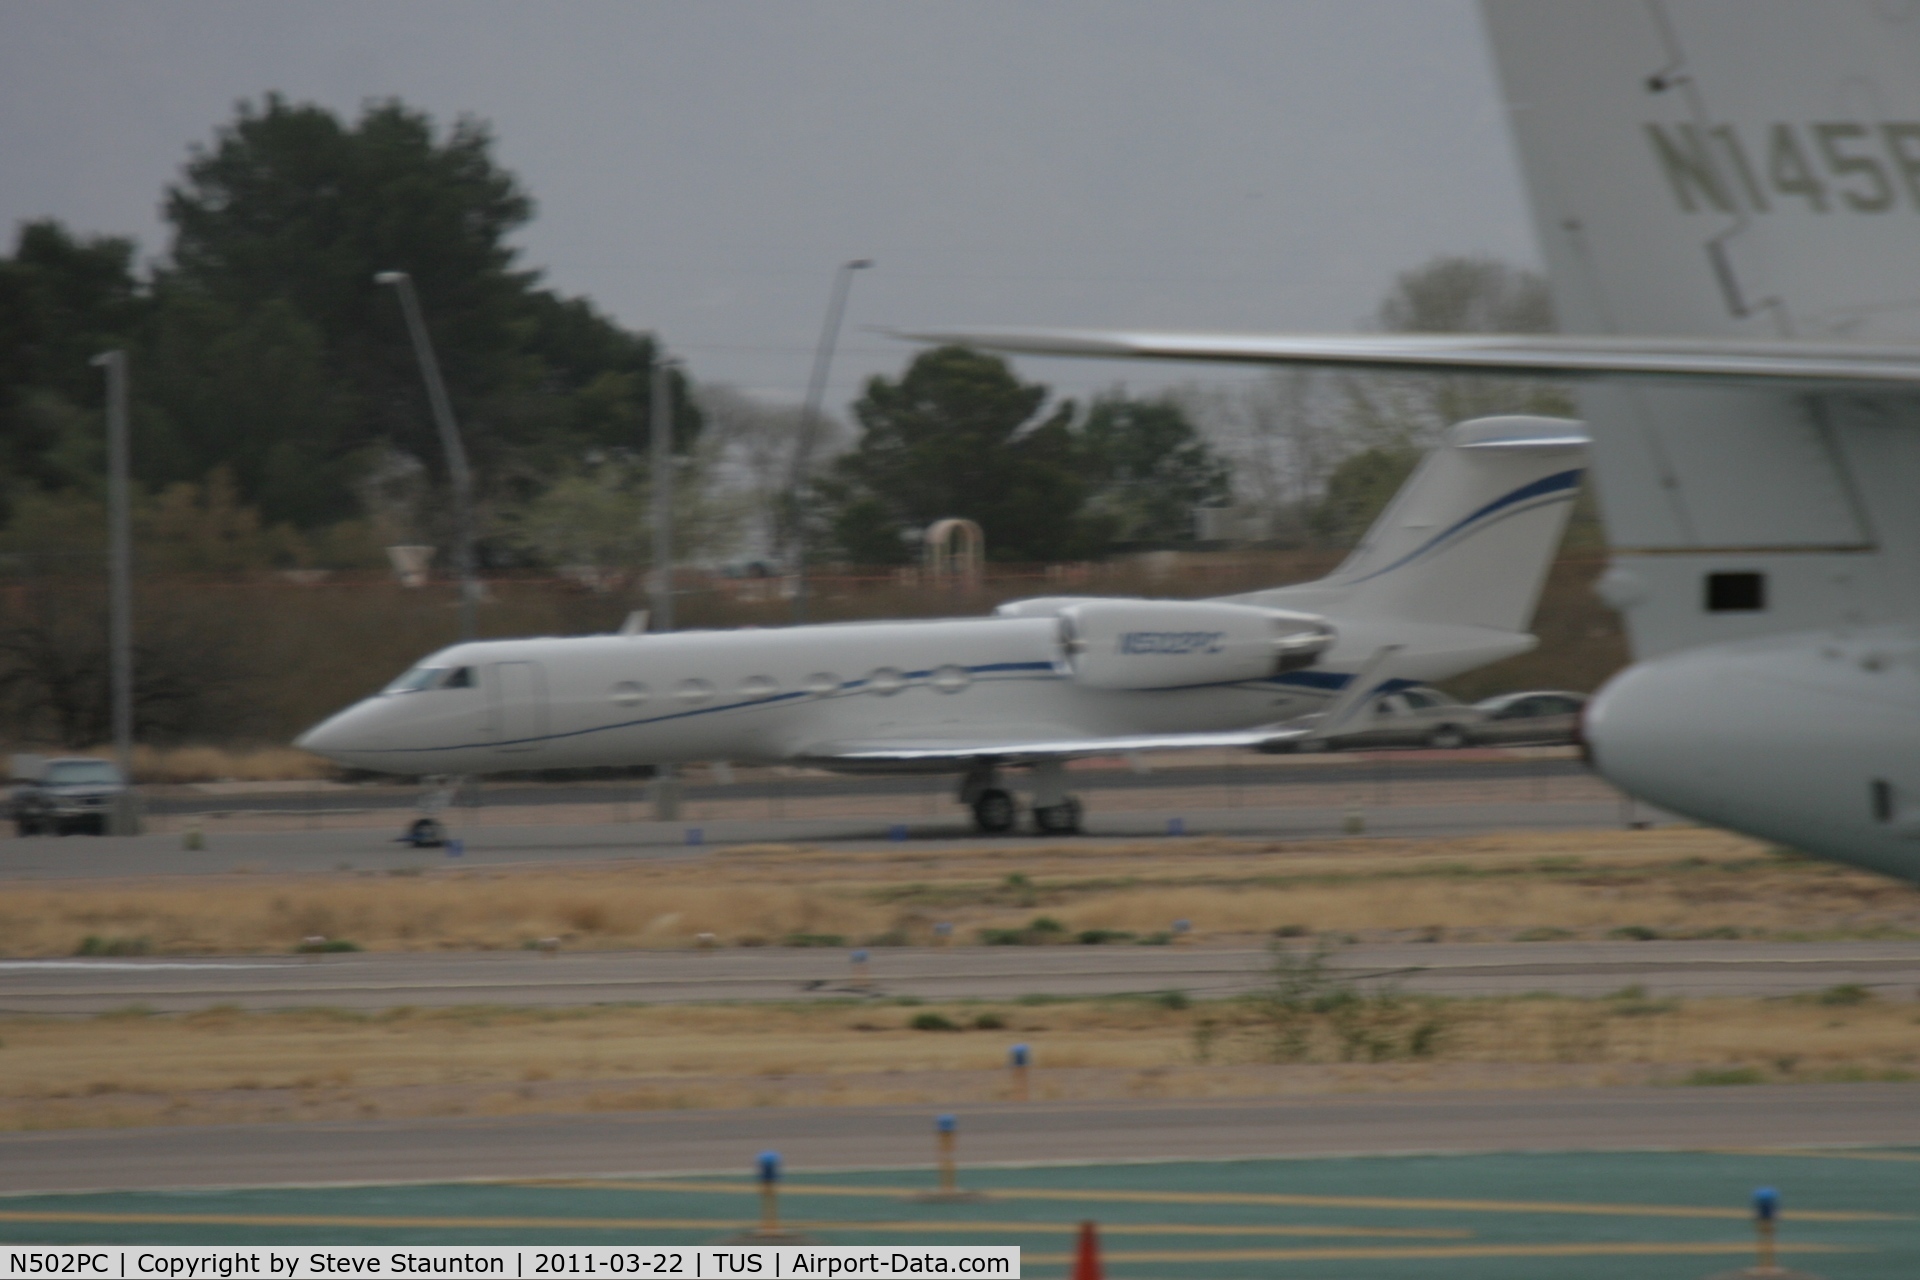 N502PC, 2001 Gulfstream Aerospace G-IV C/N 1435, Taken at Tucson International Airport, in March 2011 whilst on an Aeroprint Aviation tour